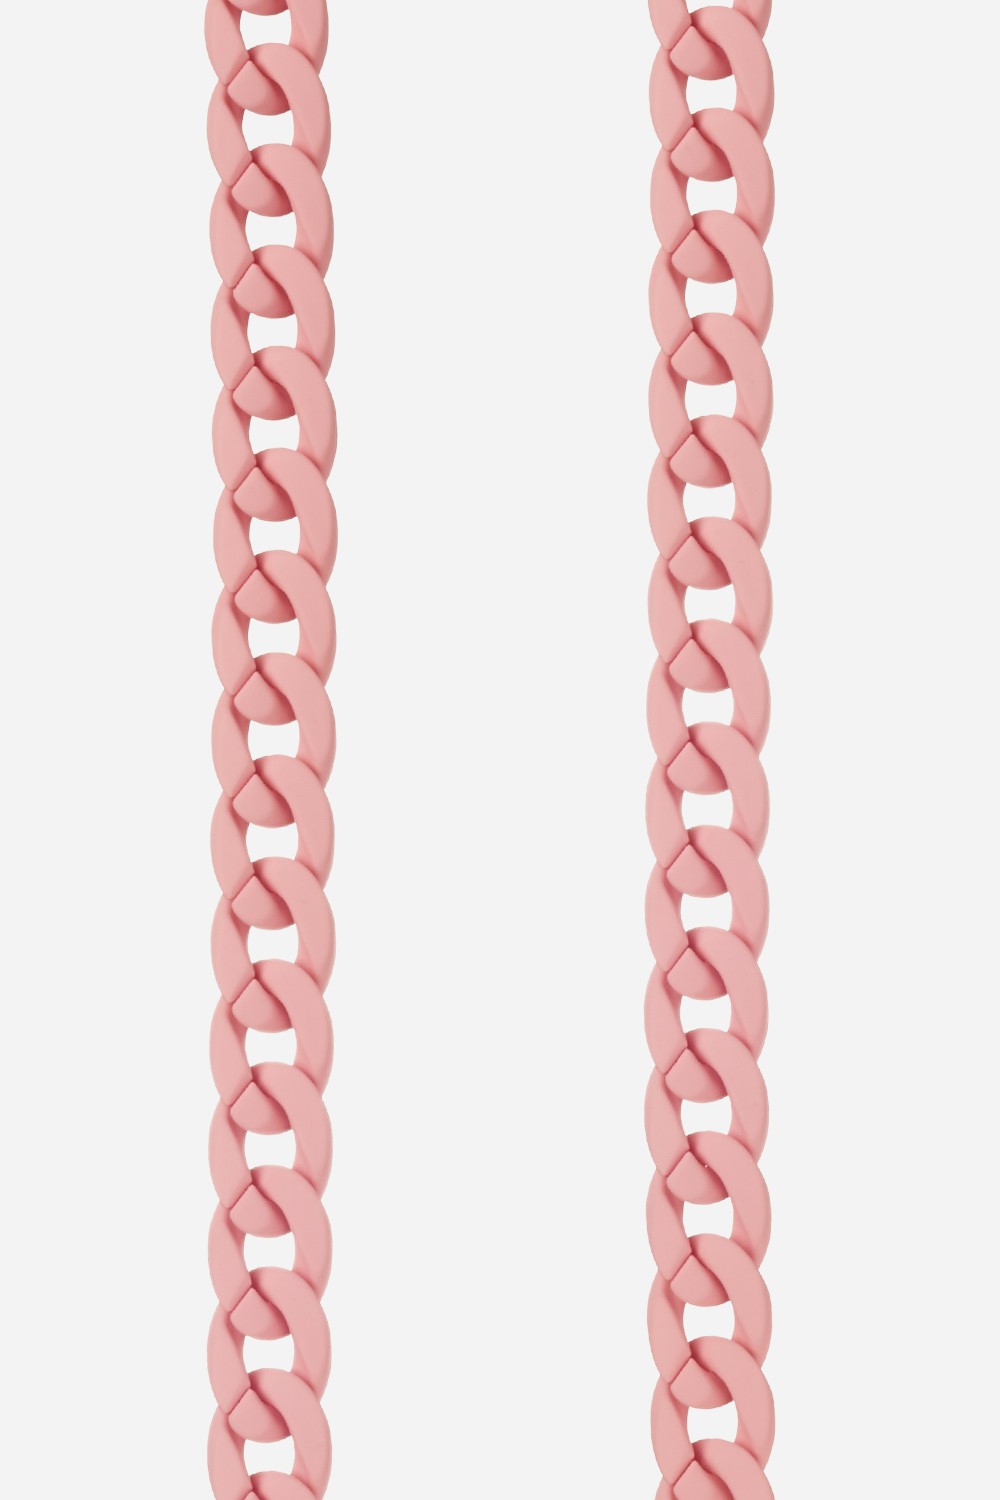 Long Sarah Chain Pink 120 cm